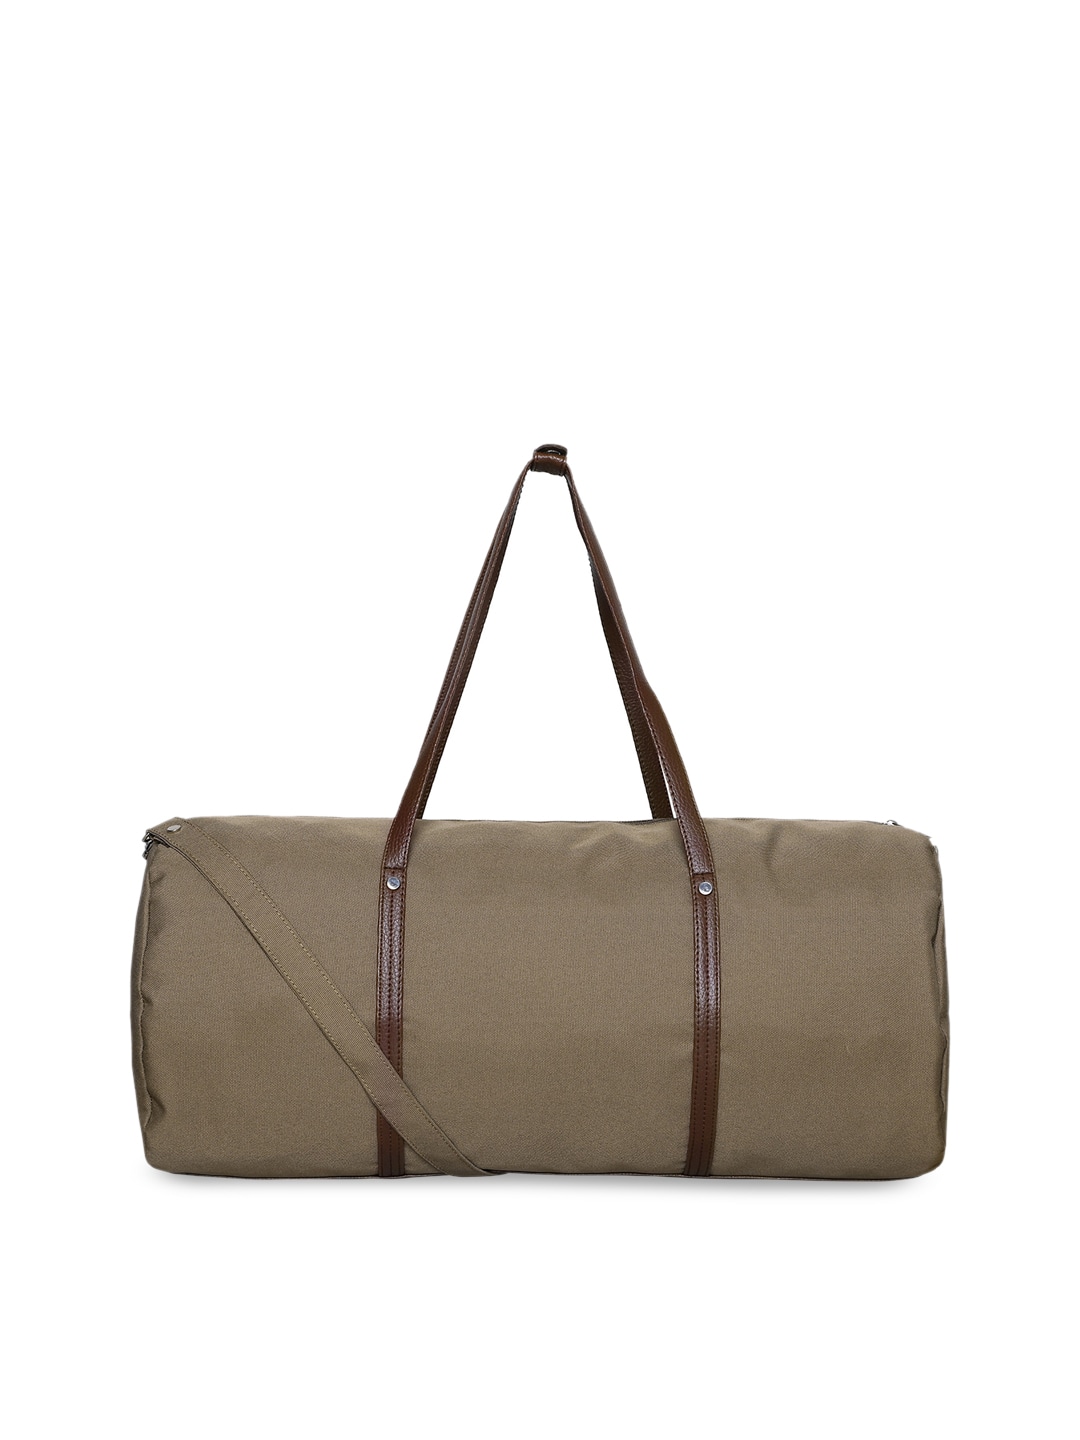 Accessories Duffel Bag | Toteteca Unisex Beige & Brown Solid Gym Duffle Bag - DJ12141